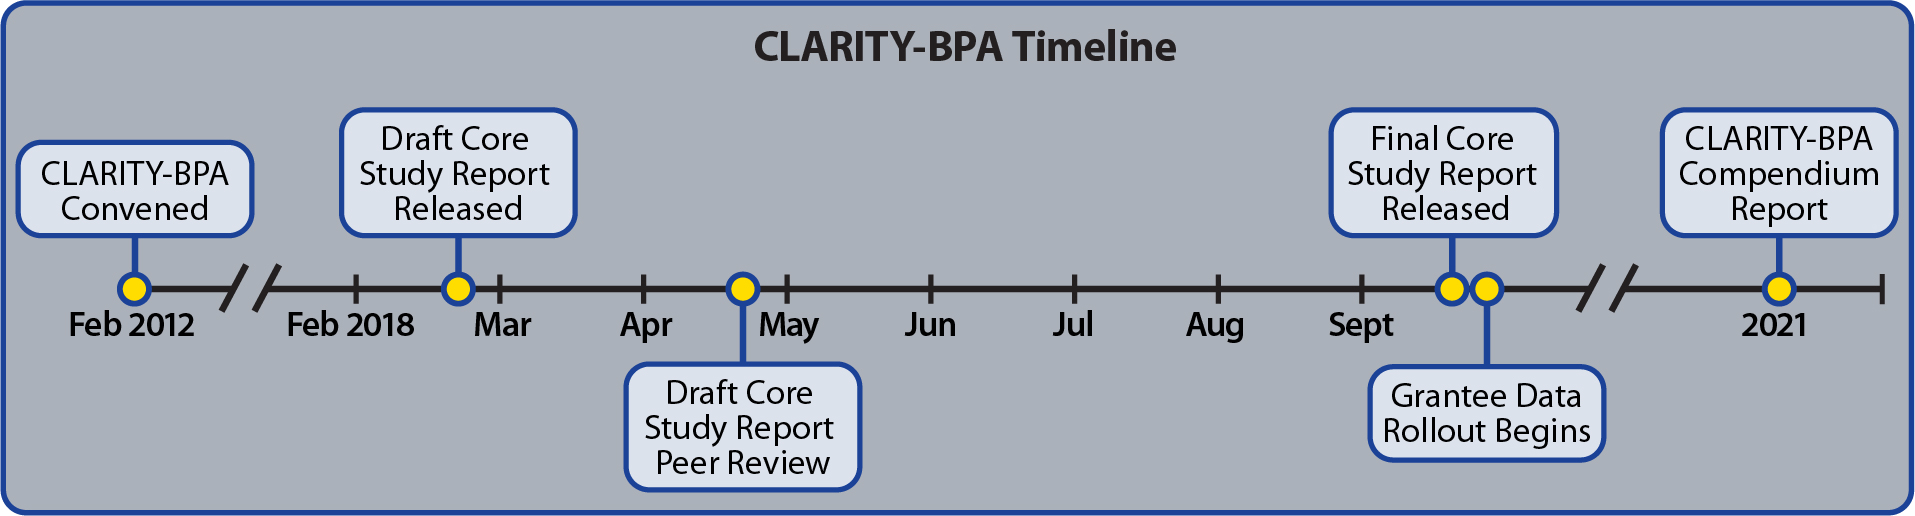 Clarity-BPA Timeline